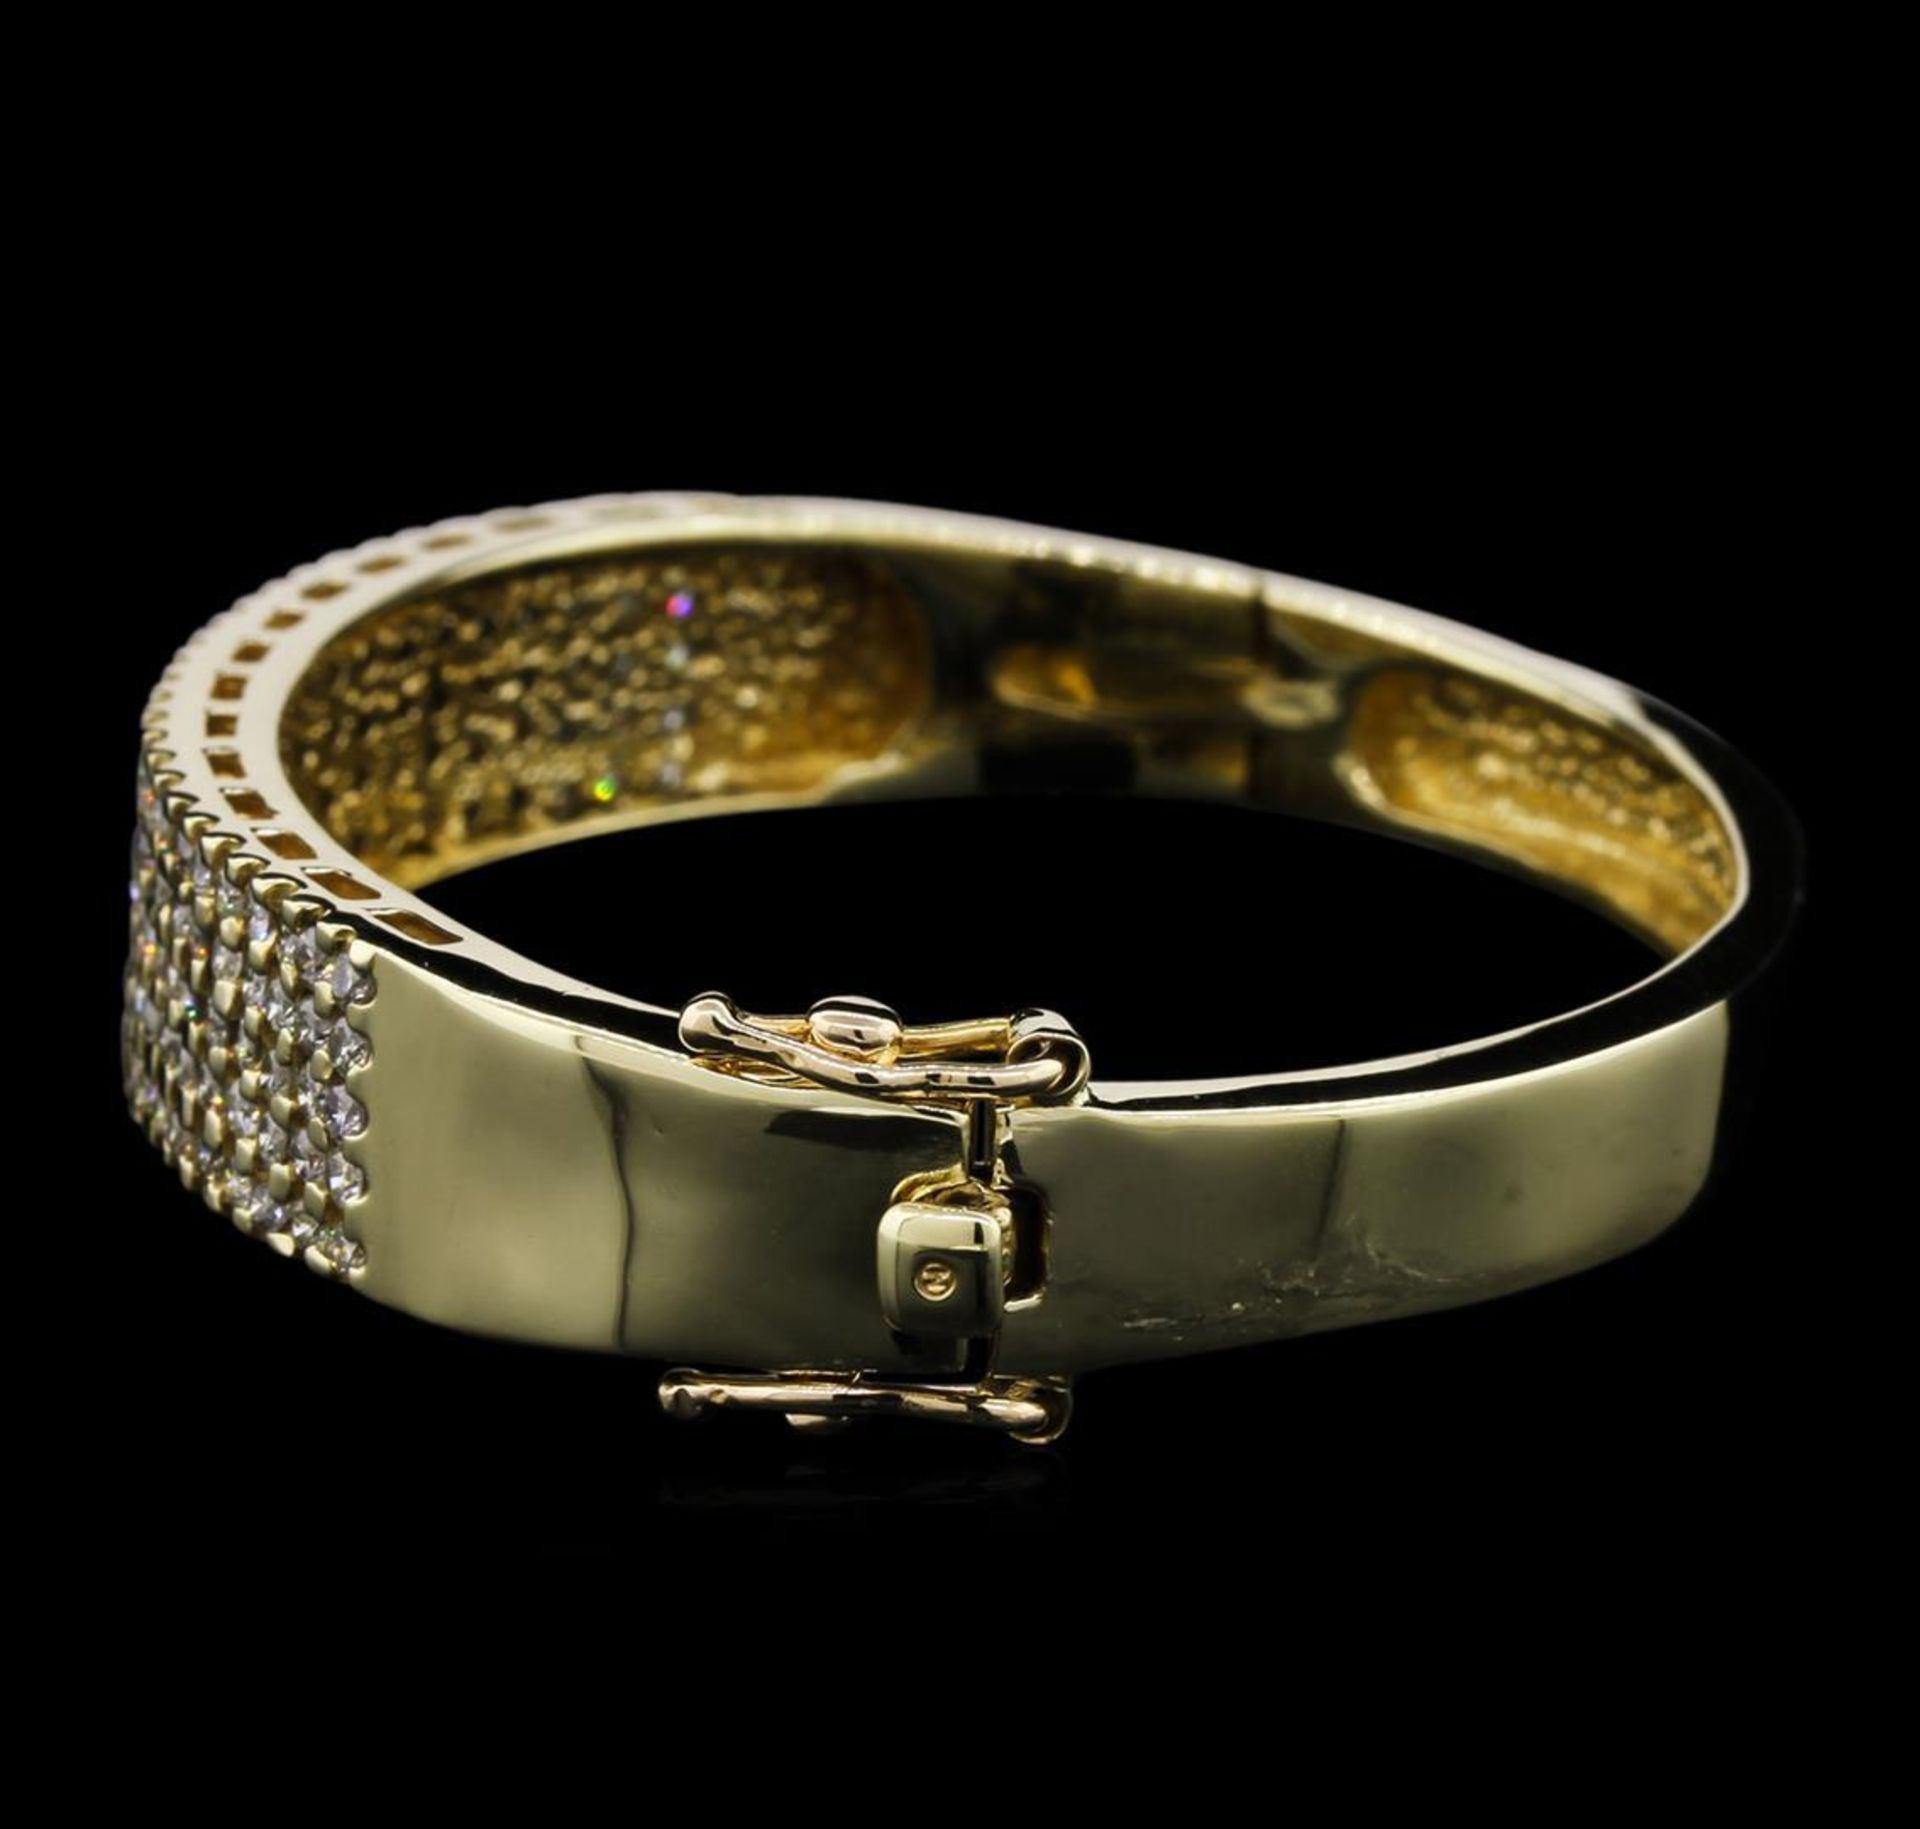 2.75 ctw Diamond Bangle Bracelet - 14KT Yellow Gold - Image 2 of 4